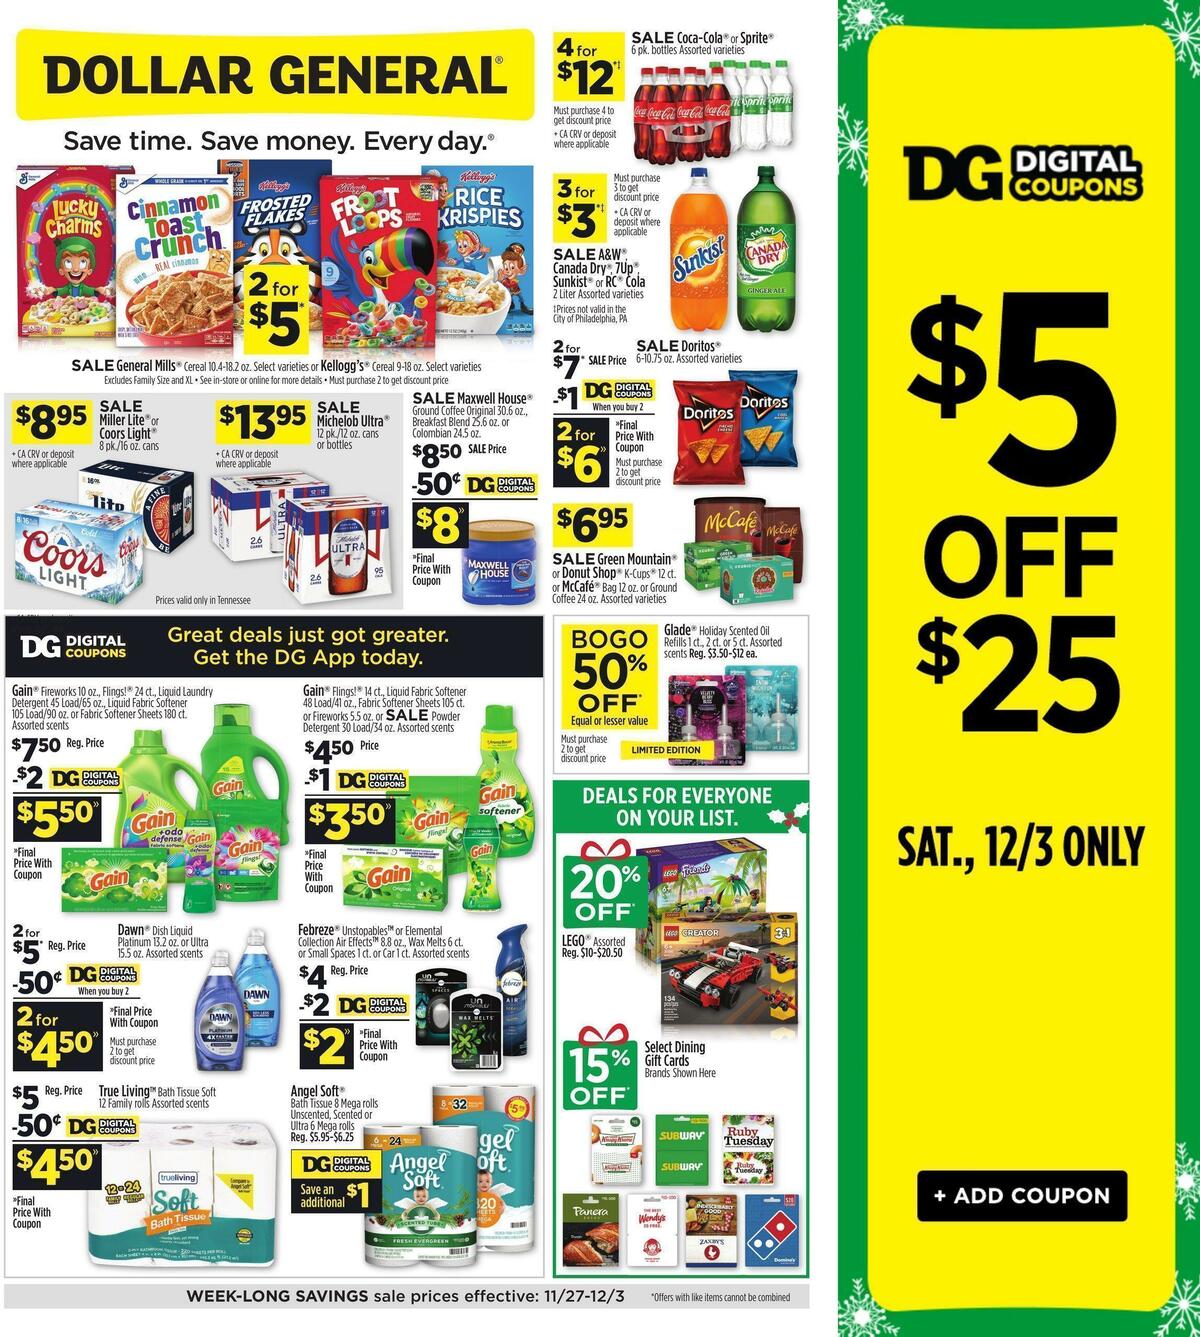 Dollar General Weekly Ad from November 27